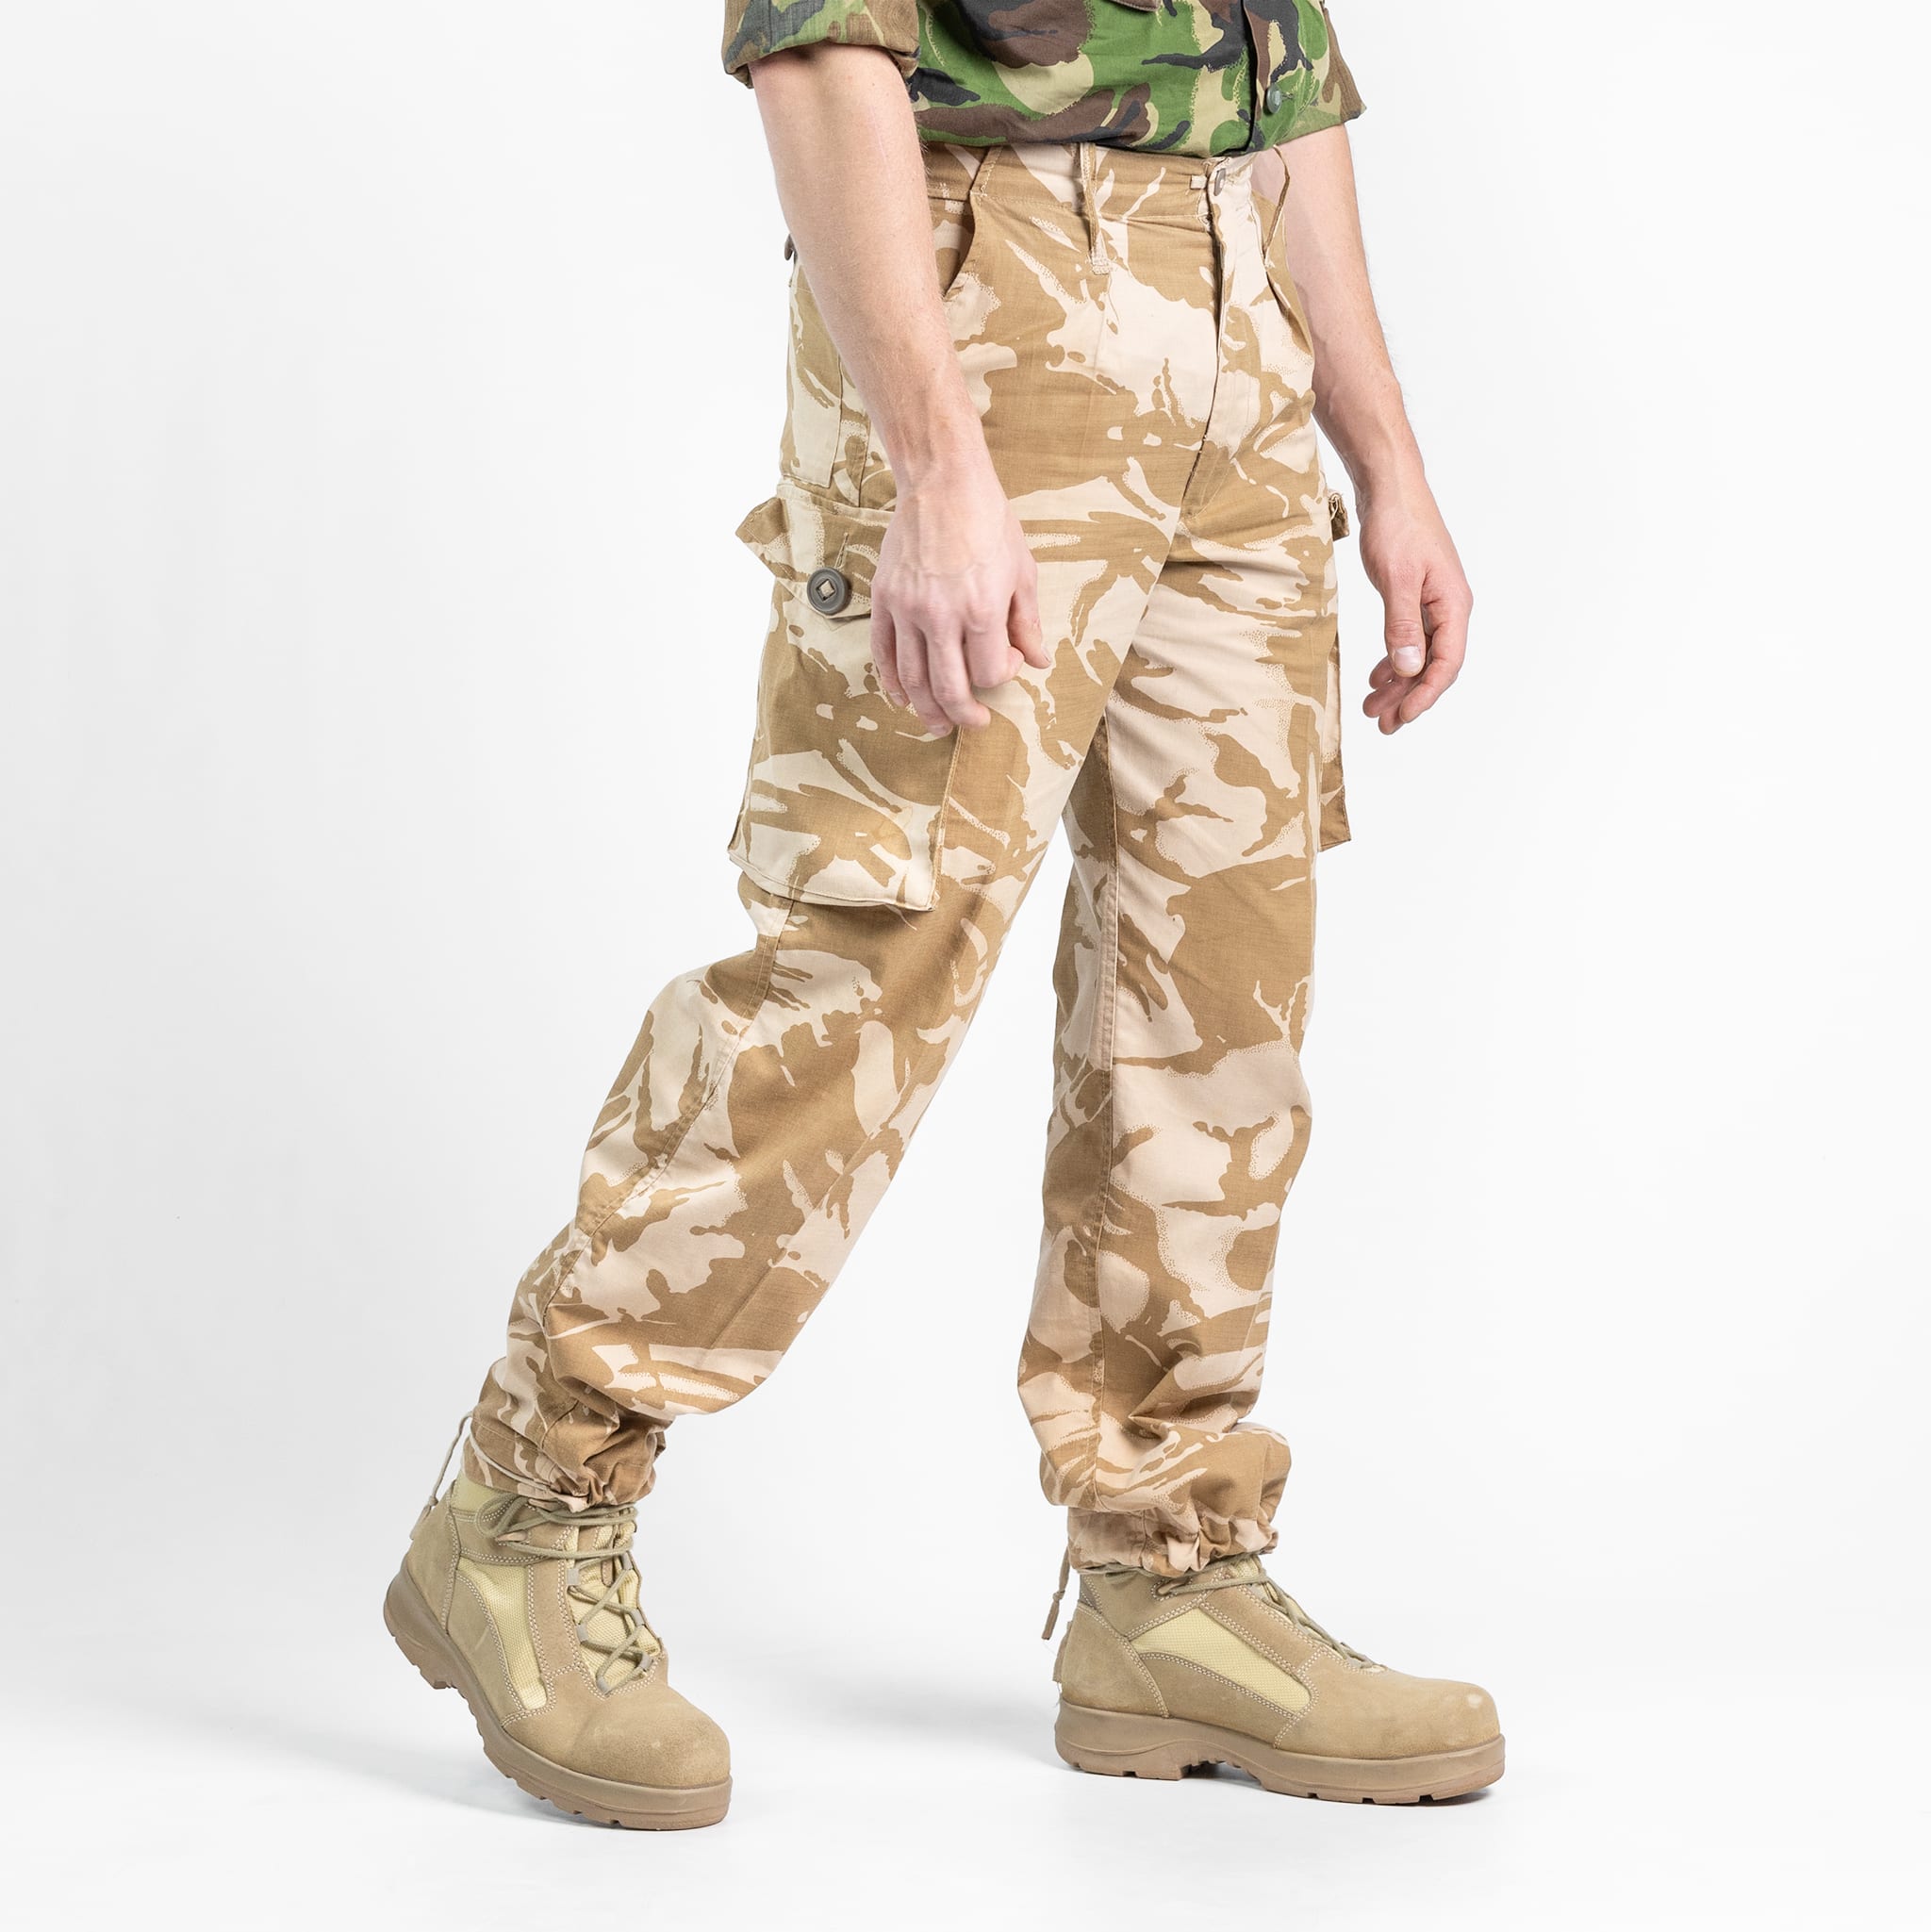 Lancer Tactical Gen 3 Combat Pants w/ Knee Pads ( Desert Digital / Option )